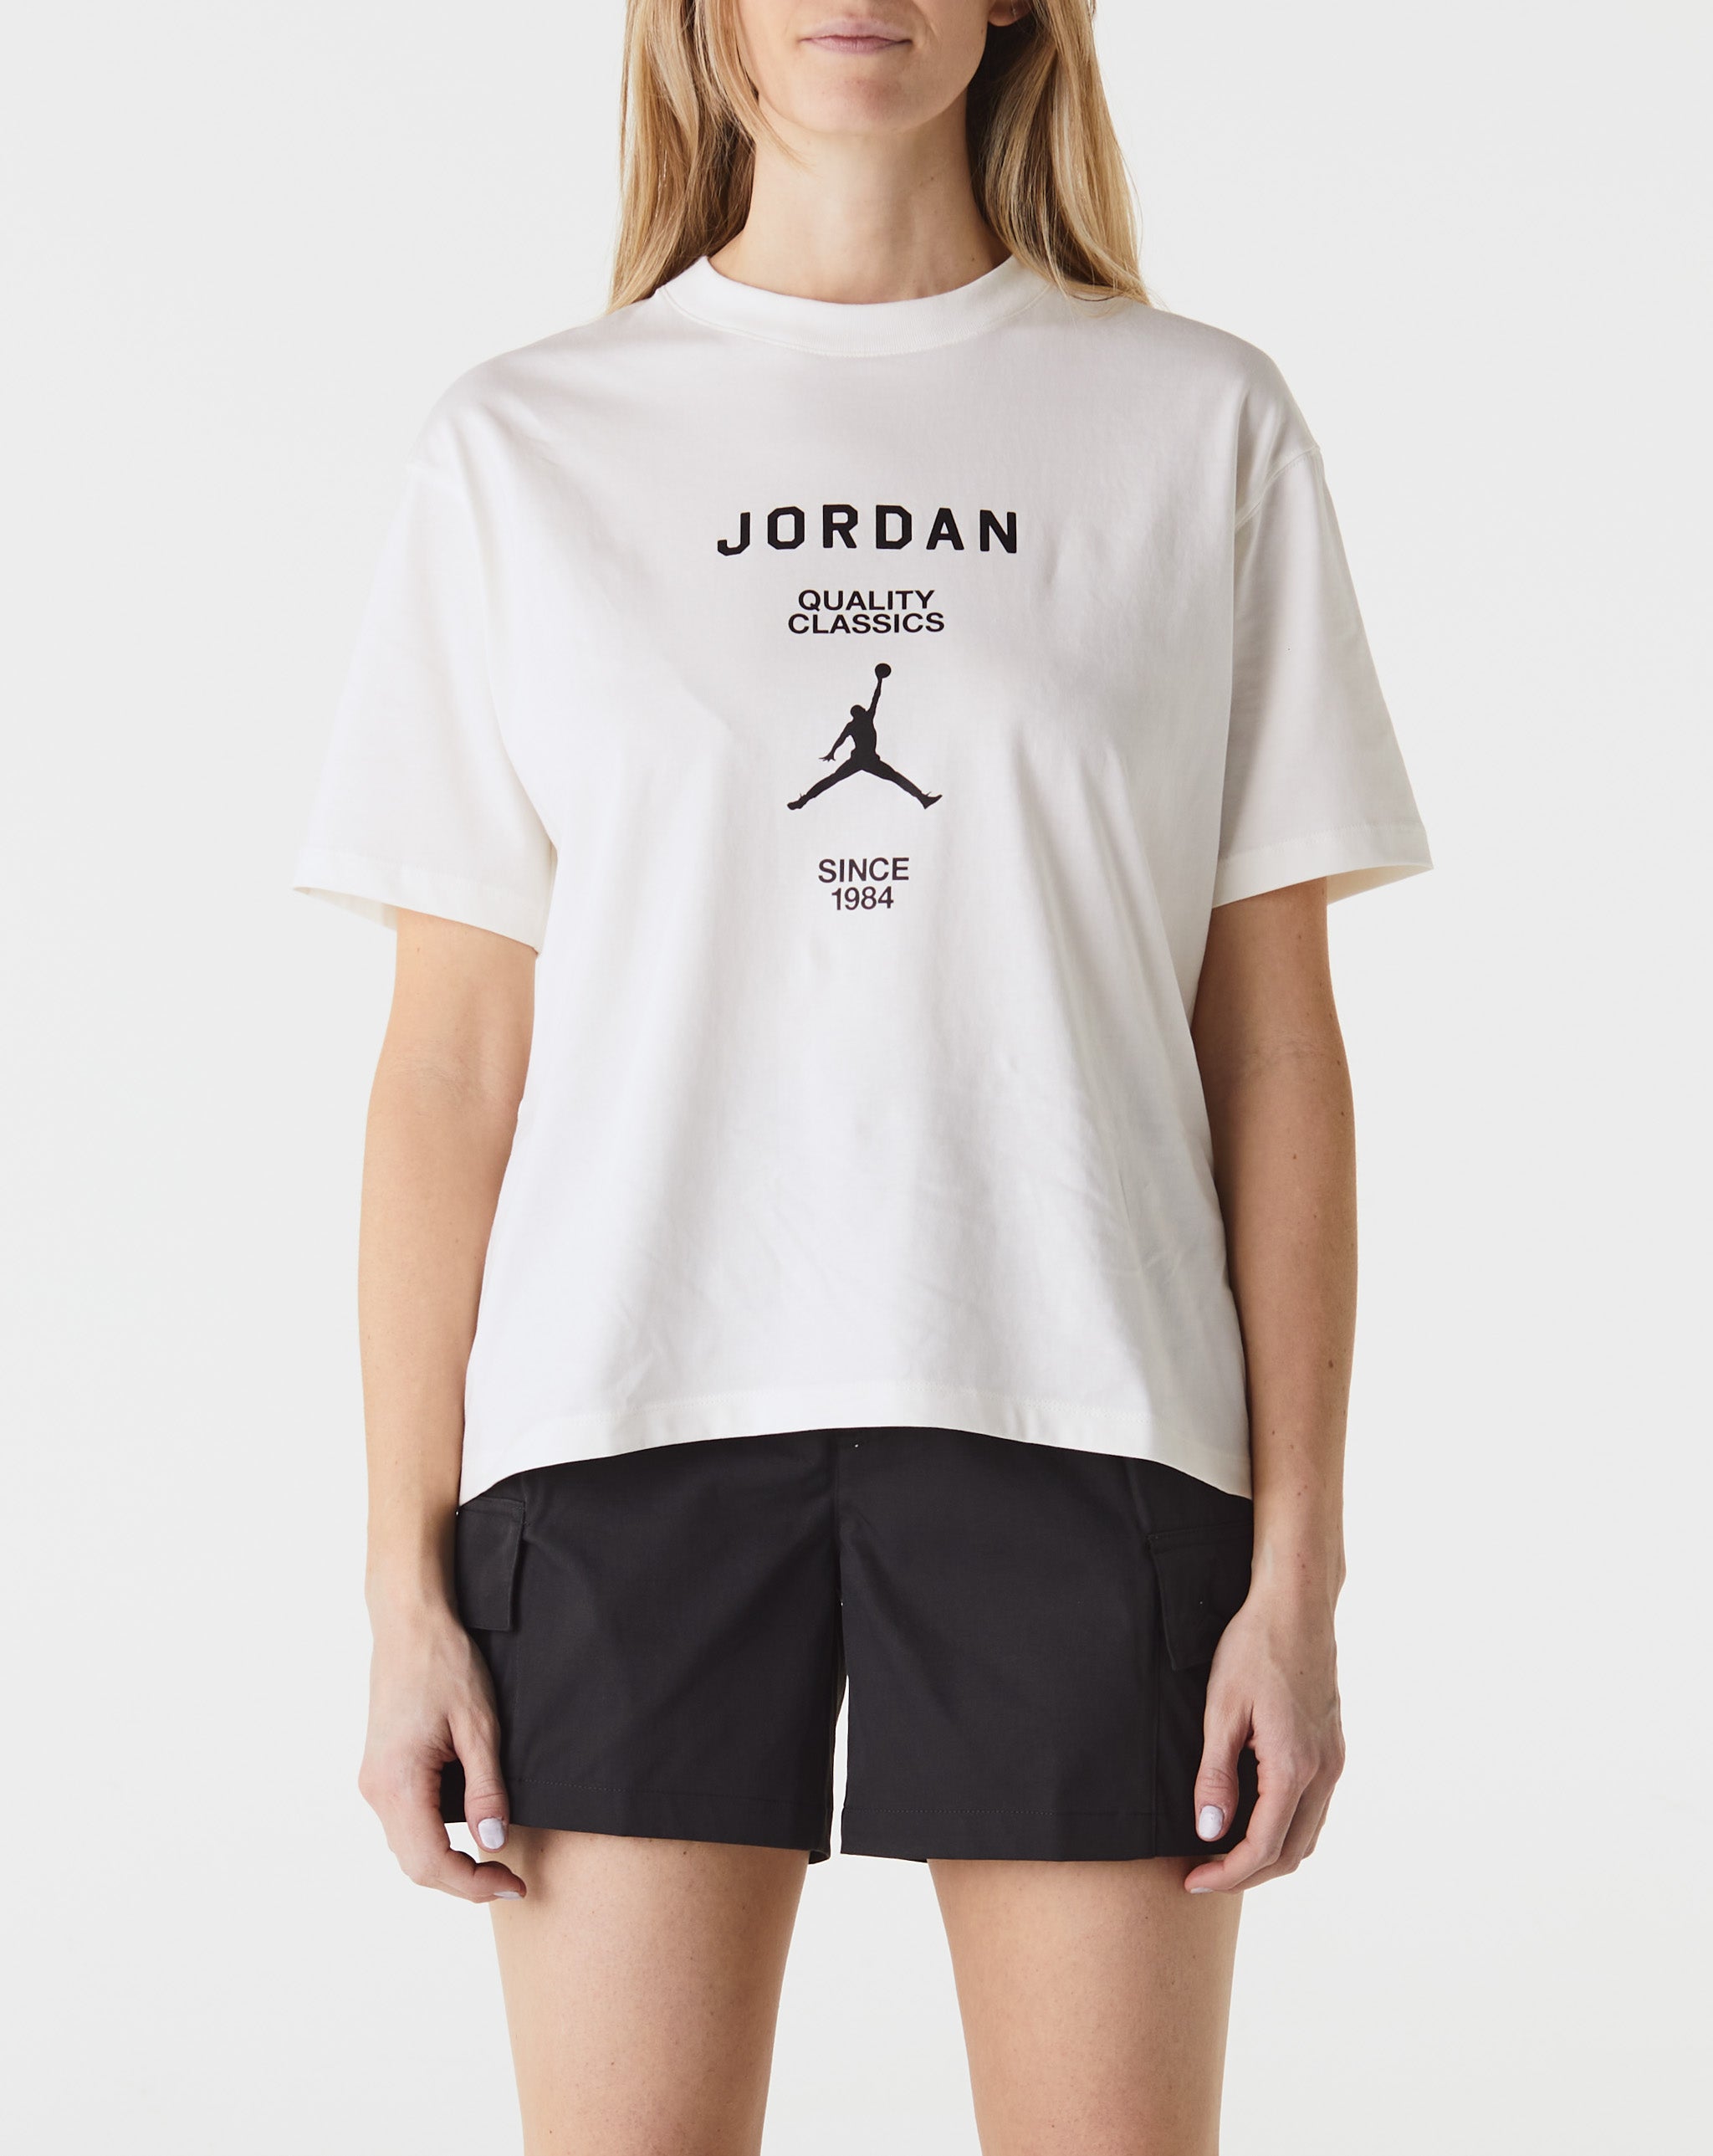 Air Jordan Women's Jordan Quality Classics T-Shirt  - XHIBITION